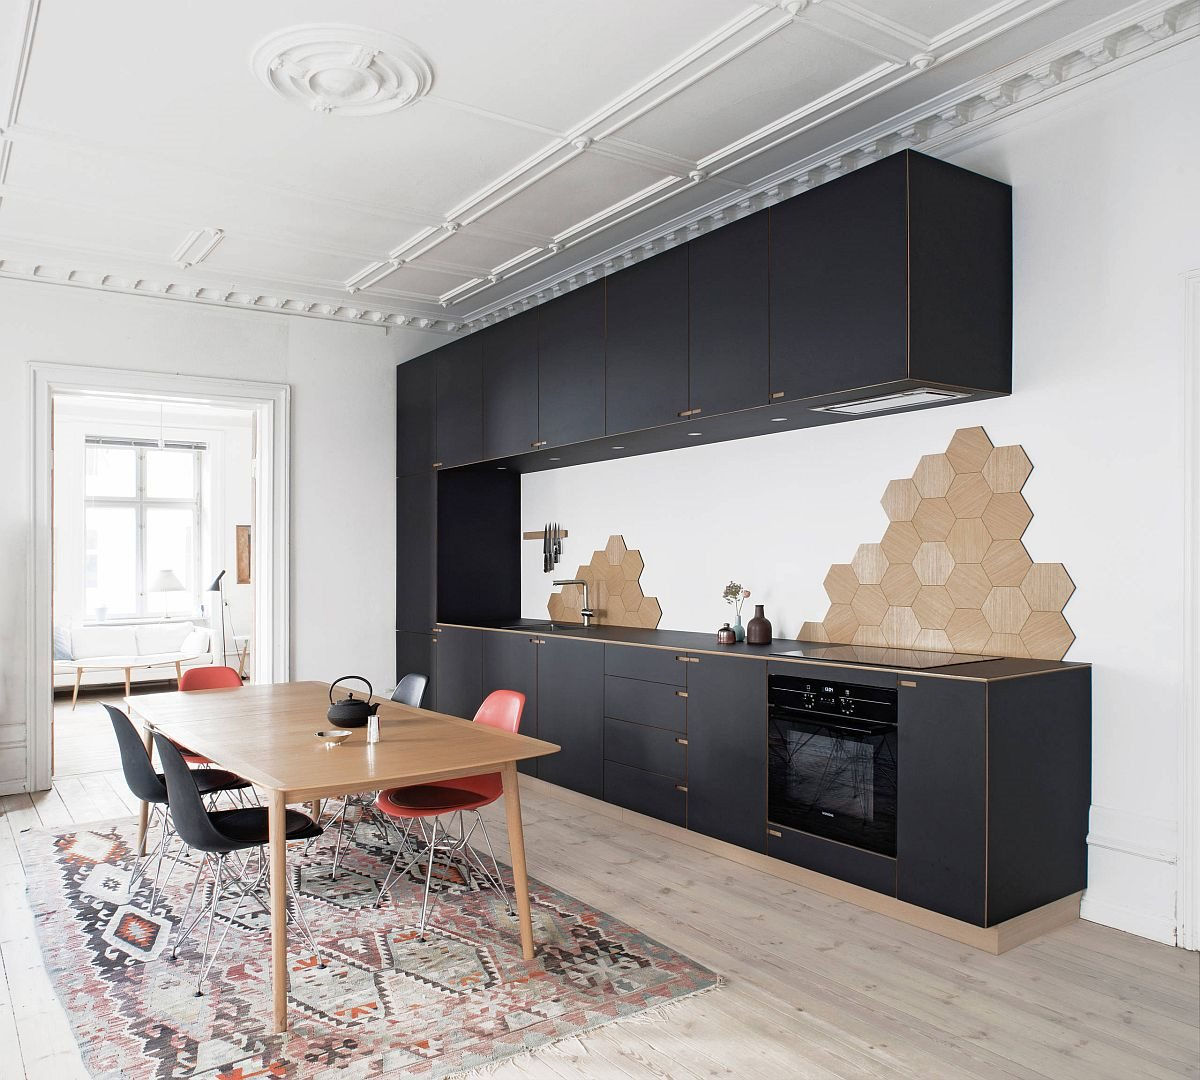 sleek-and-stunning-single-wall-kitchen-design-with-minimal-scandinavian-style-37495.jpg